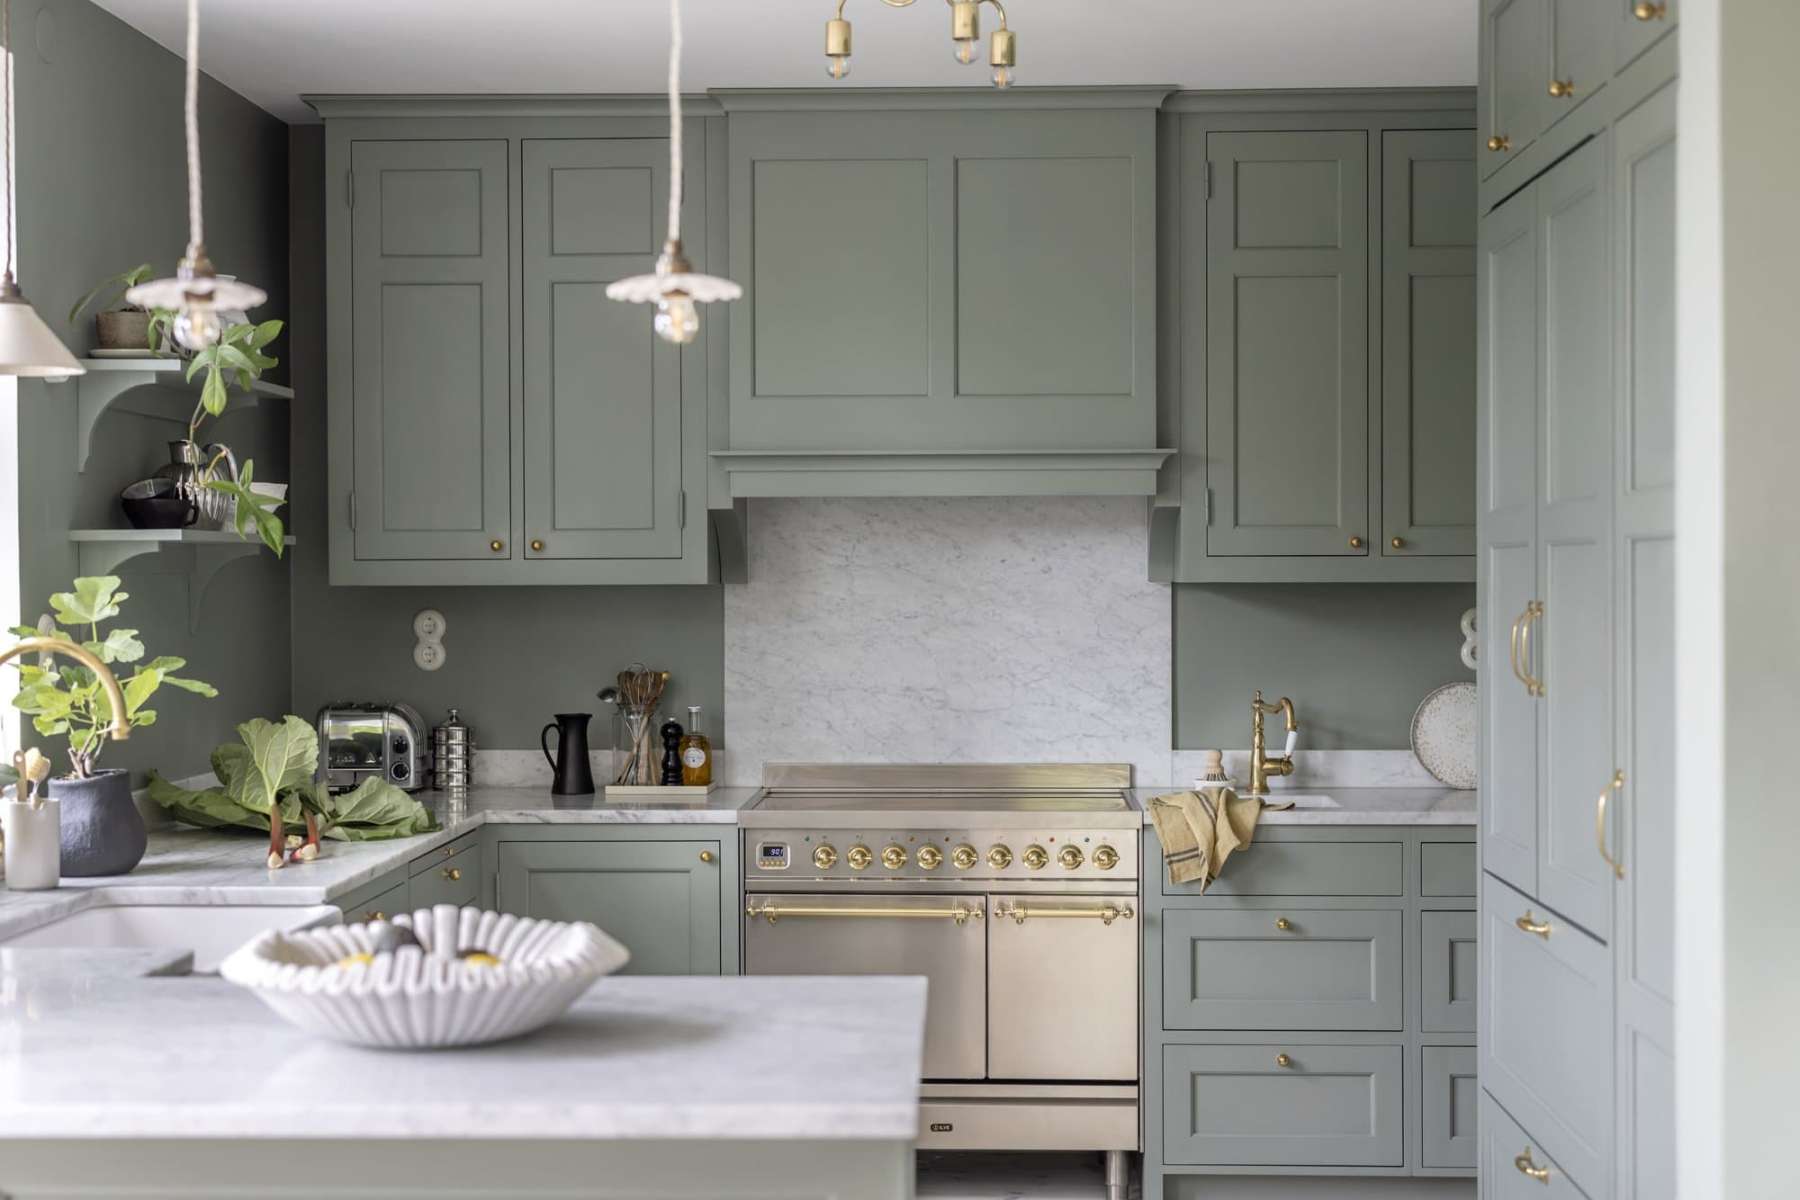 Corner kitchen cabinet ideas to optimize your kitchen layout